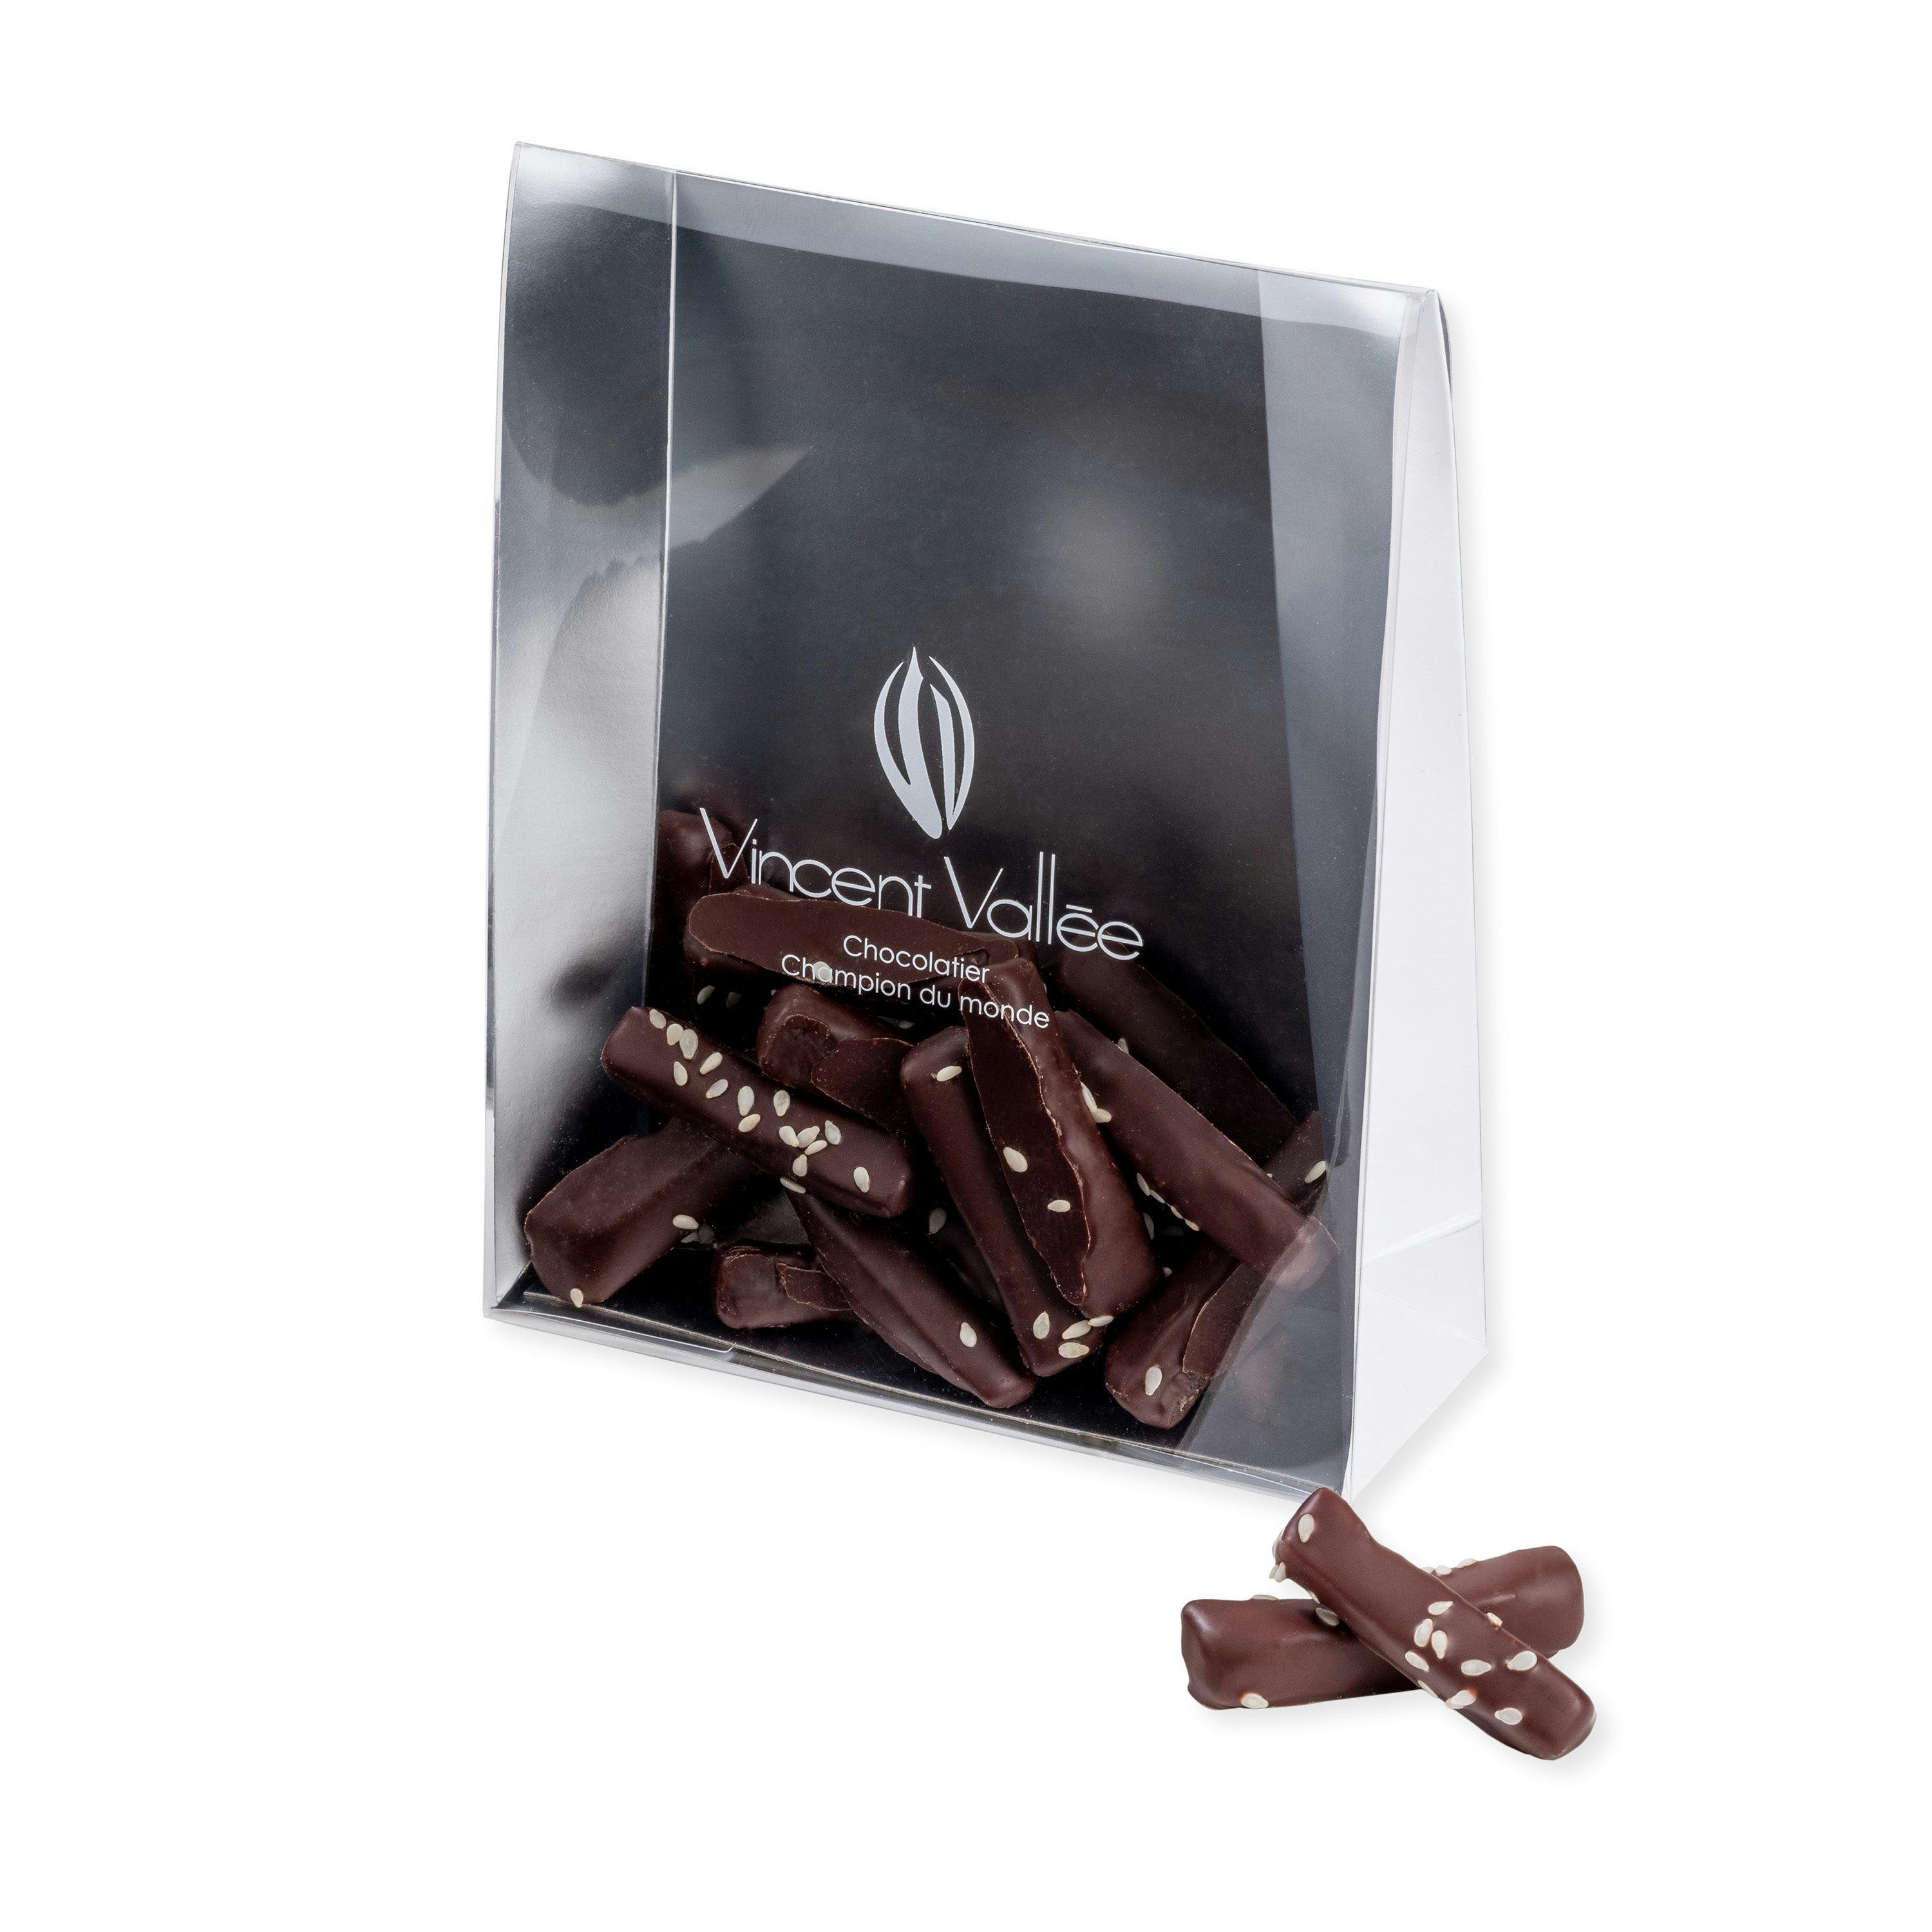 Gingembrettes chocolat 70% - Vincent Vallée world champion chocolatier